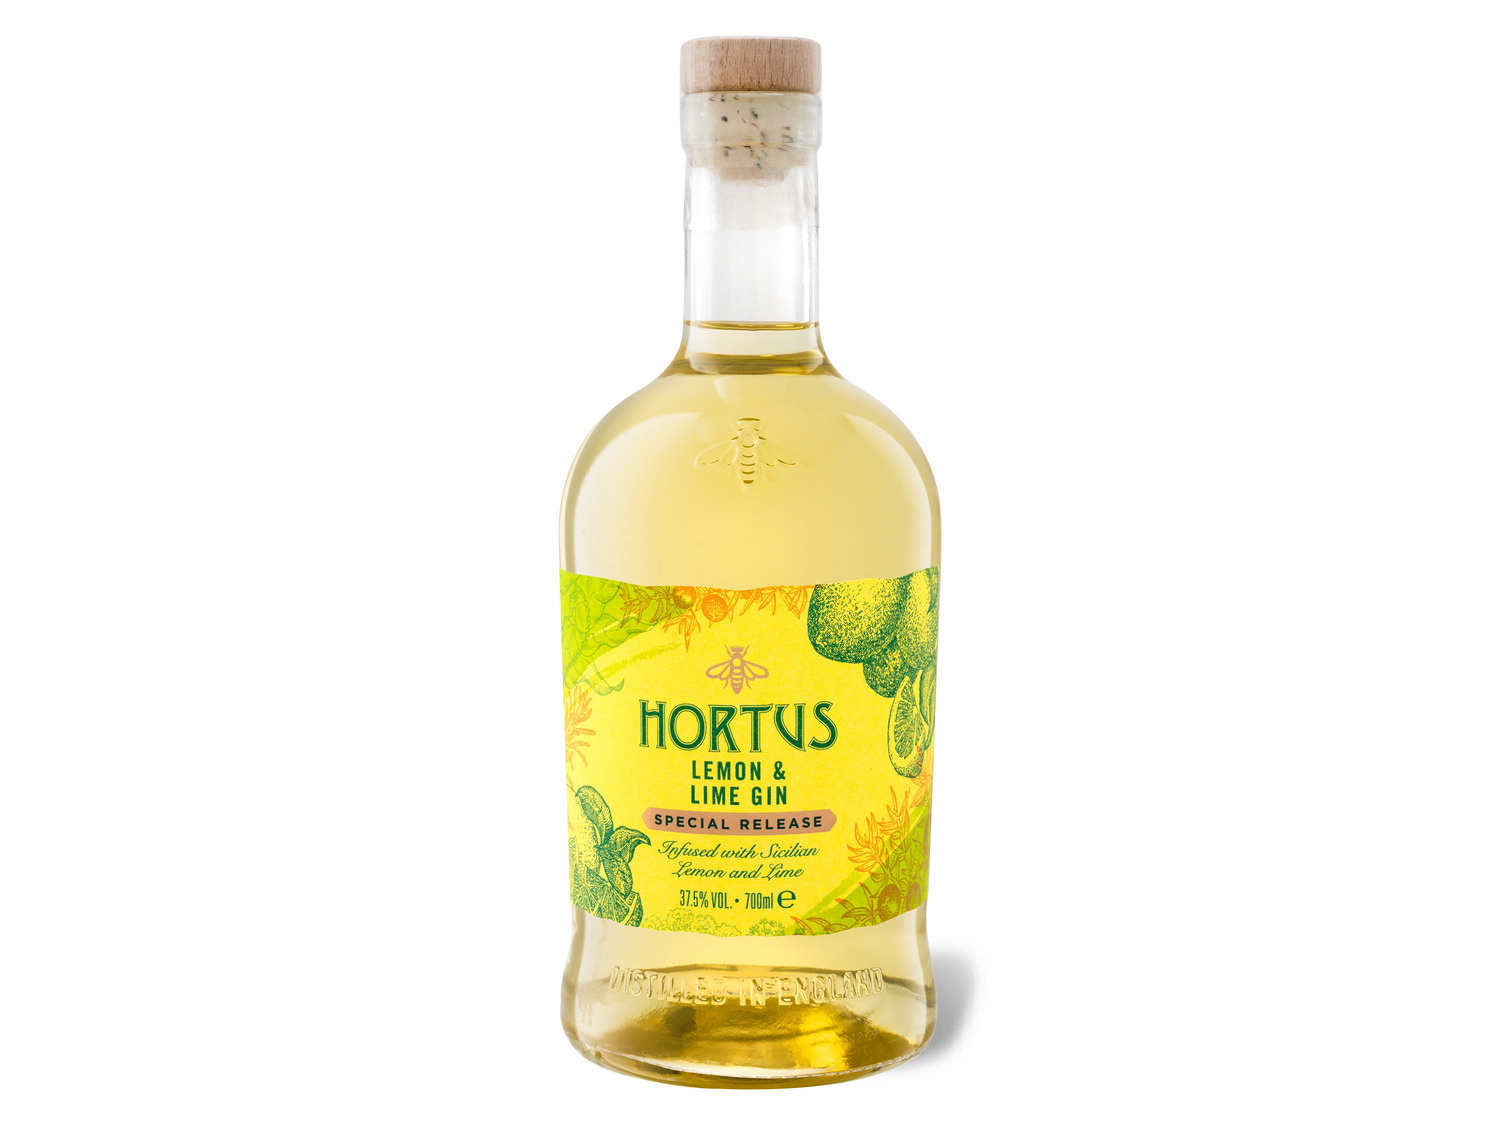 Hortus Lemon & Lime Gin 37,5% Vol online kaufen | LIDL